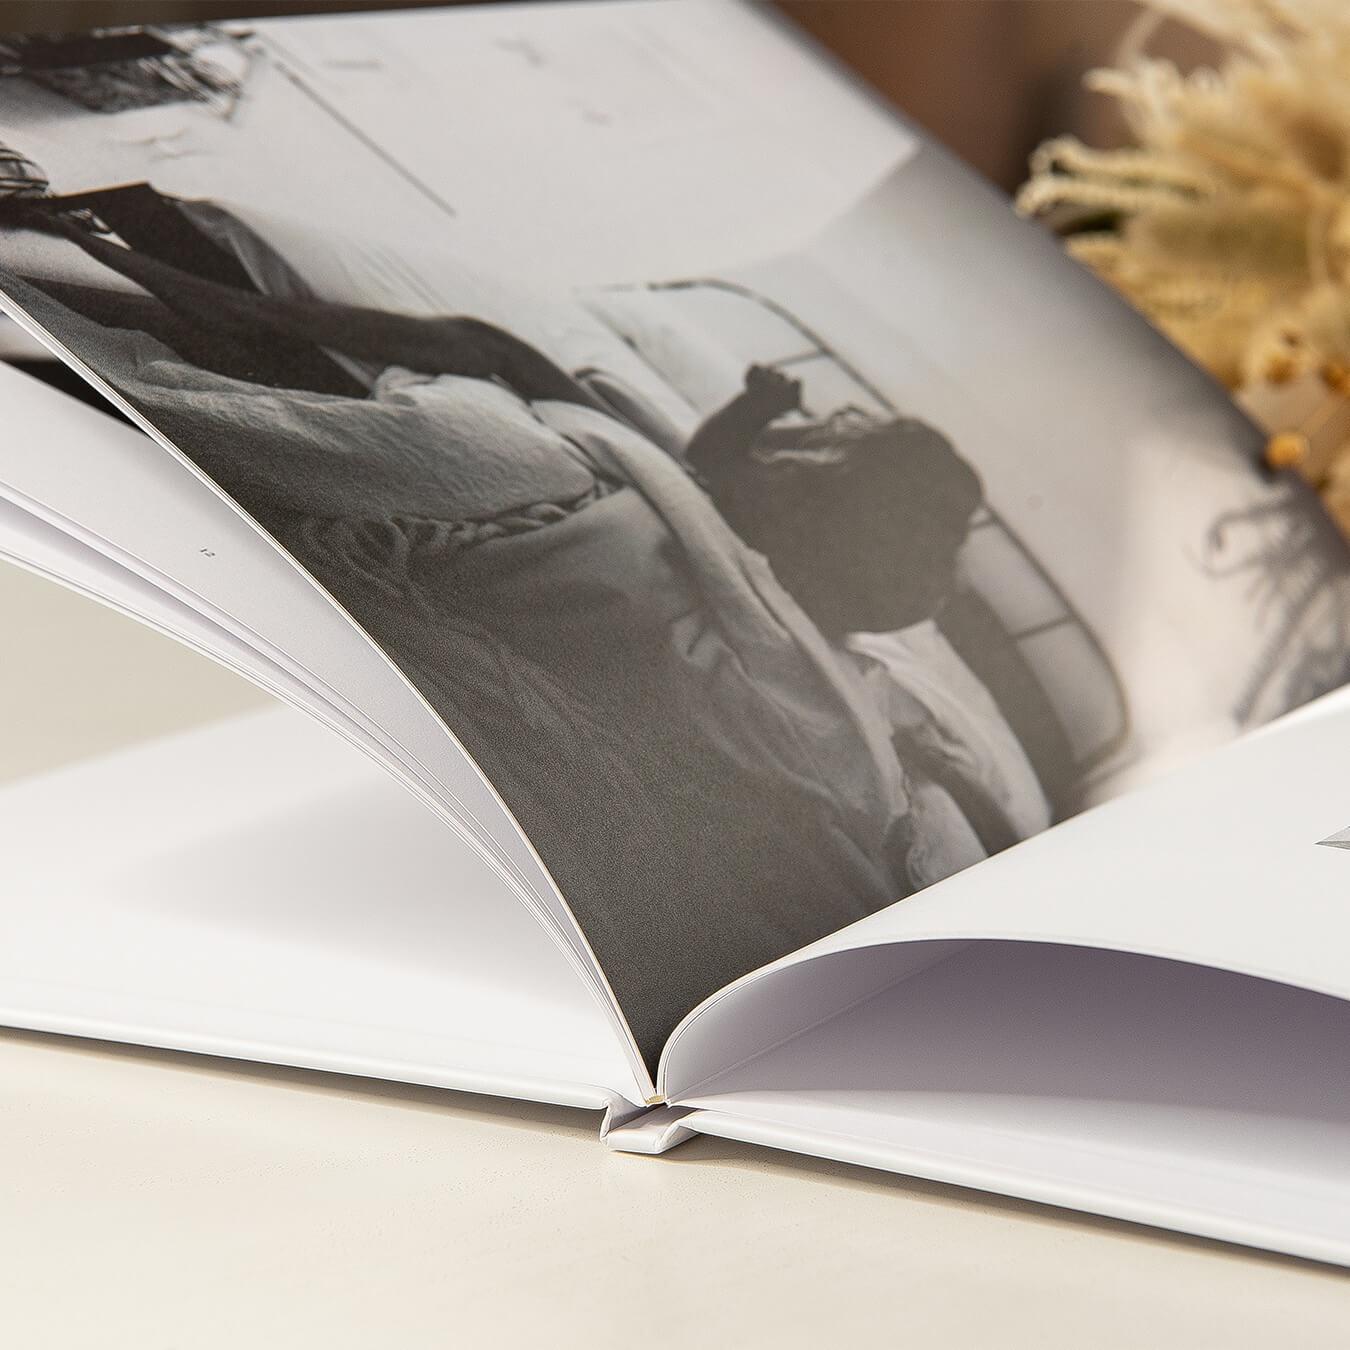 Mini álbum de fotos: Crea e imprime tus mini álbumes de fotos  personalizados con Innocence Paris